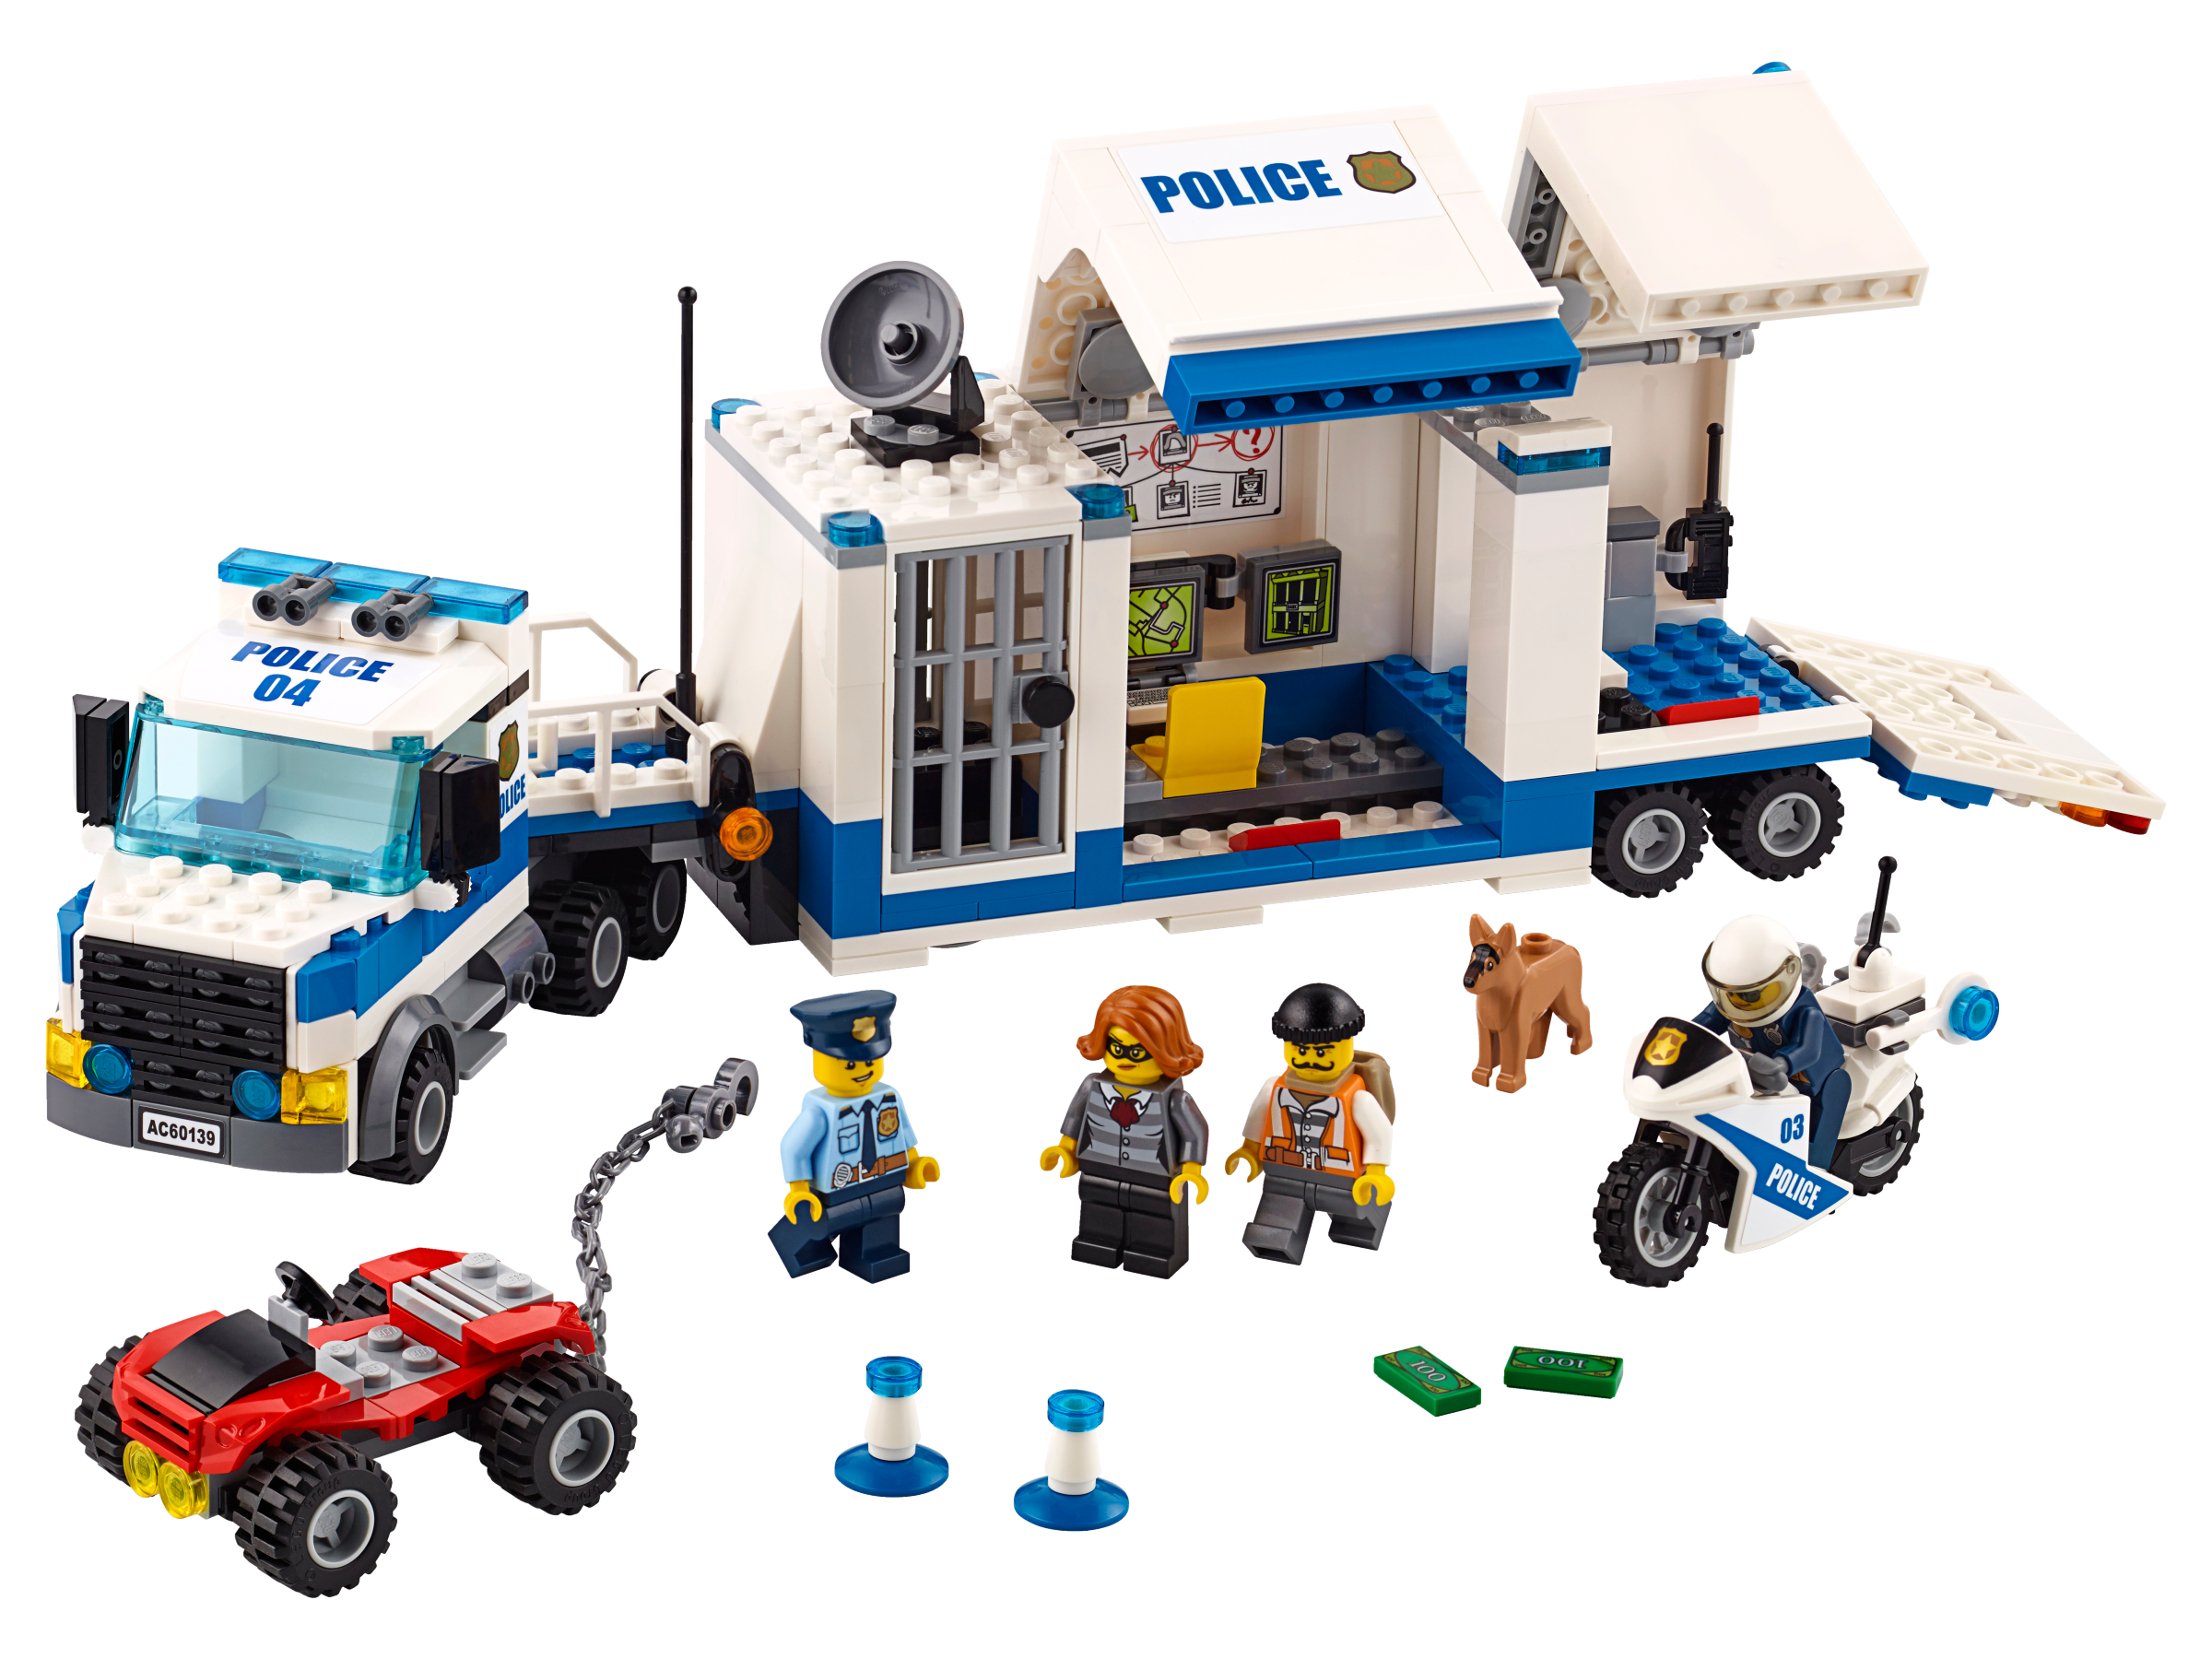 LEGO®  60139 Mobile Einsatzzentrale 